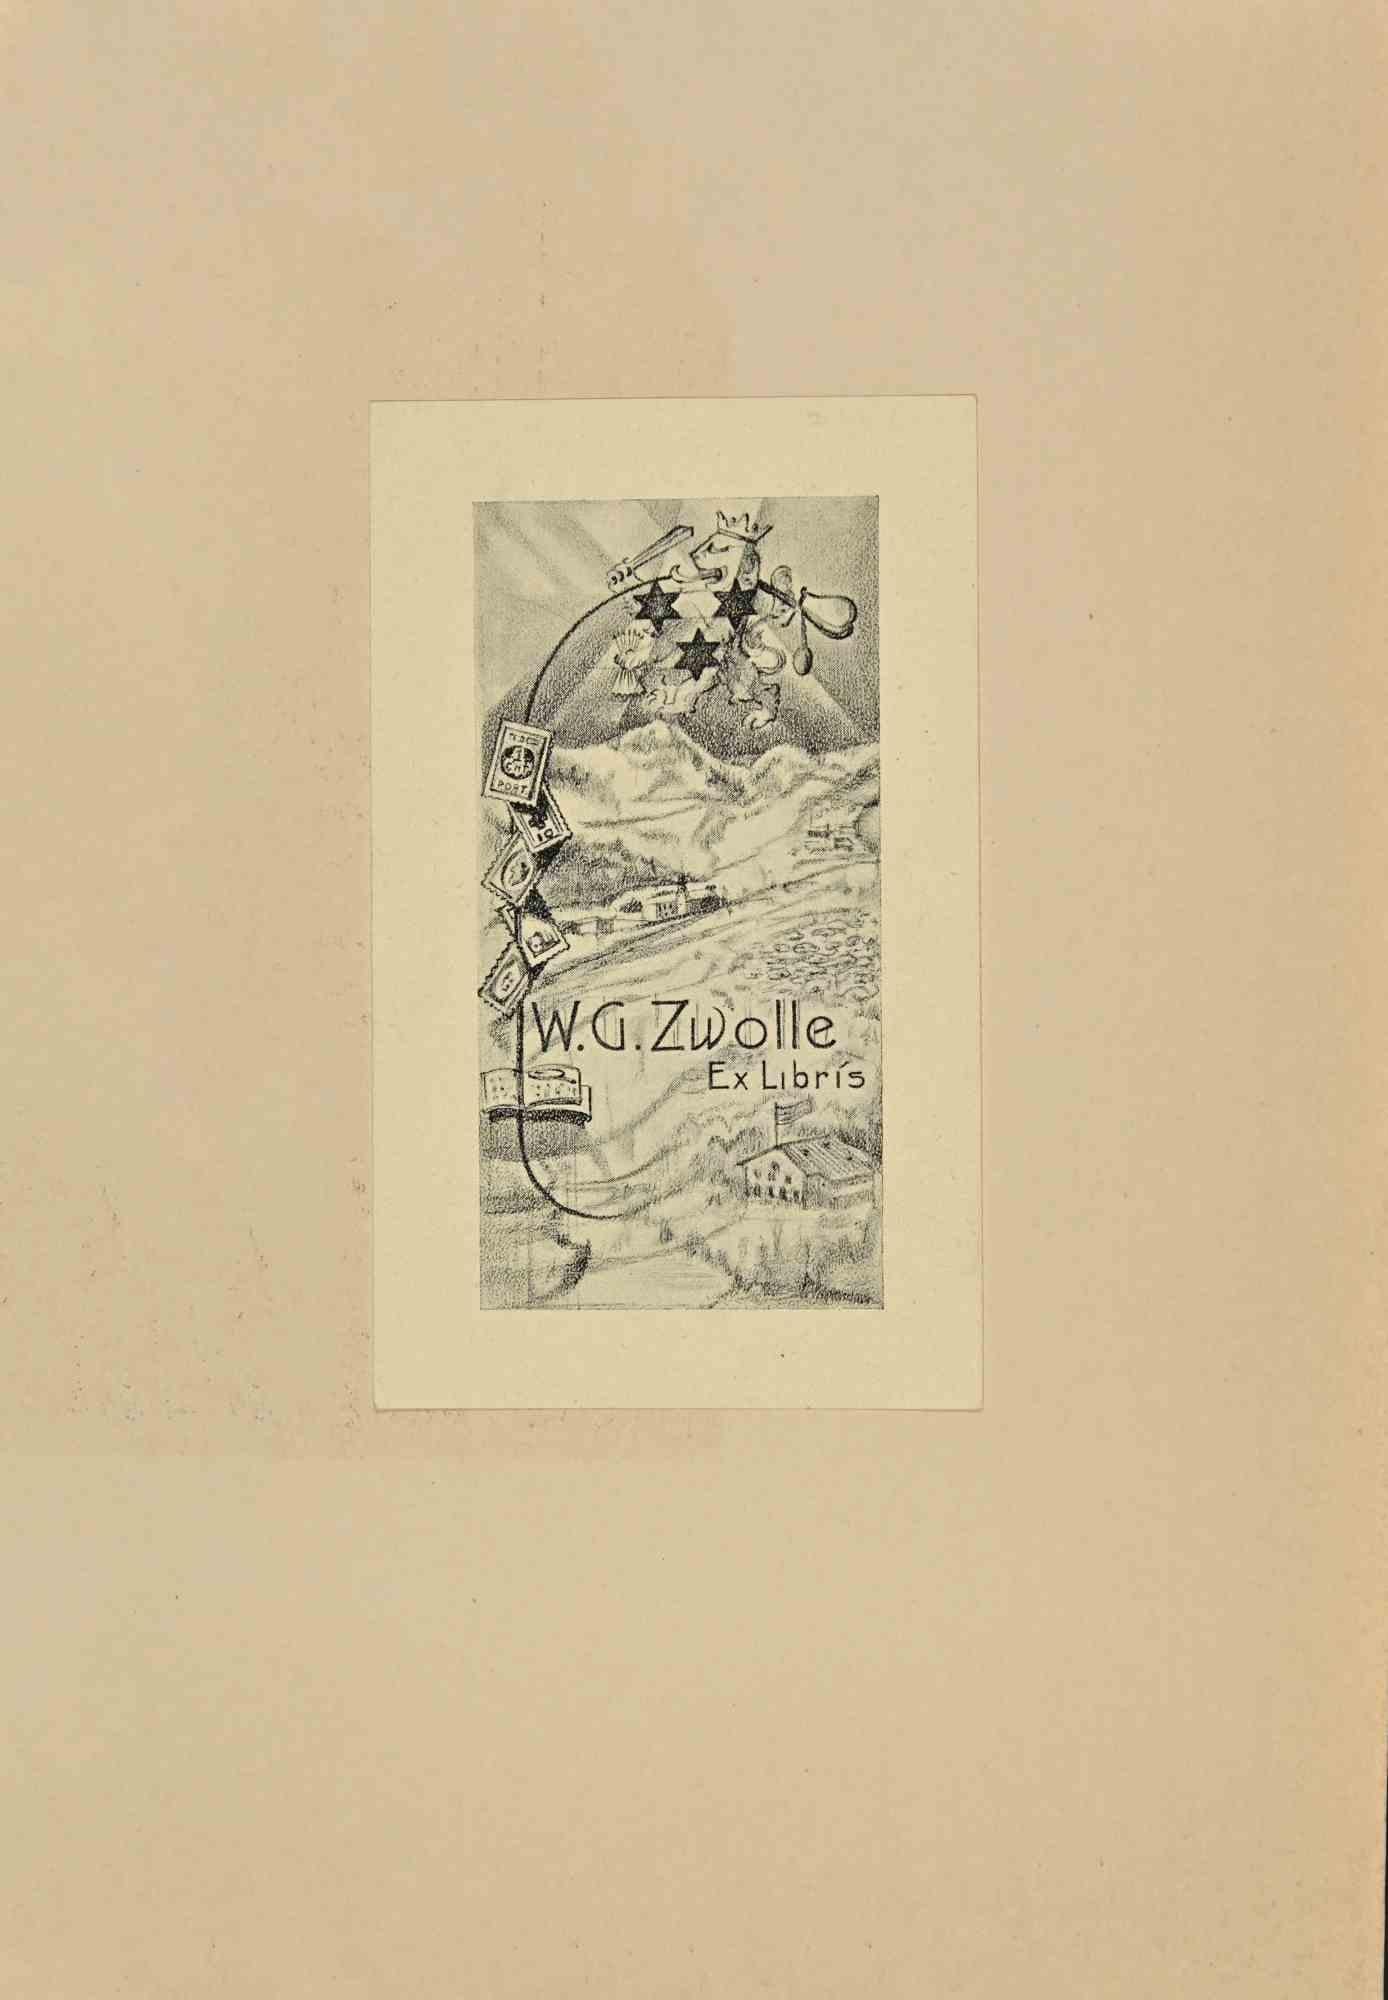 Unknown Figurative Print - Ex Libris W.G.Zwolle - Woodcut - 1940